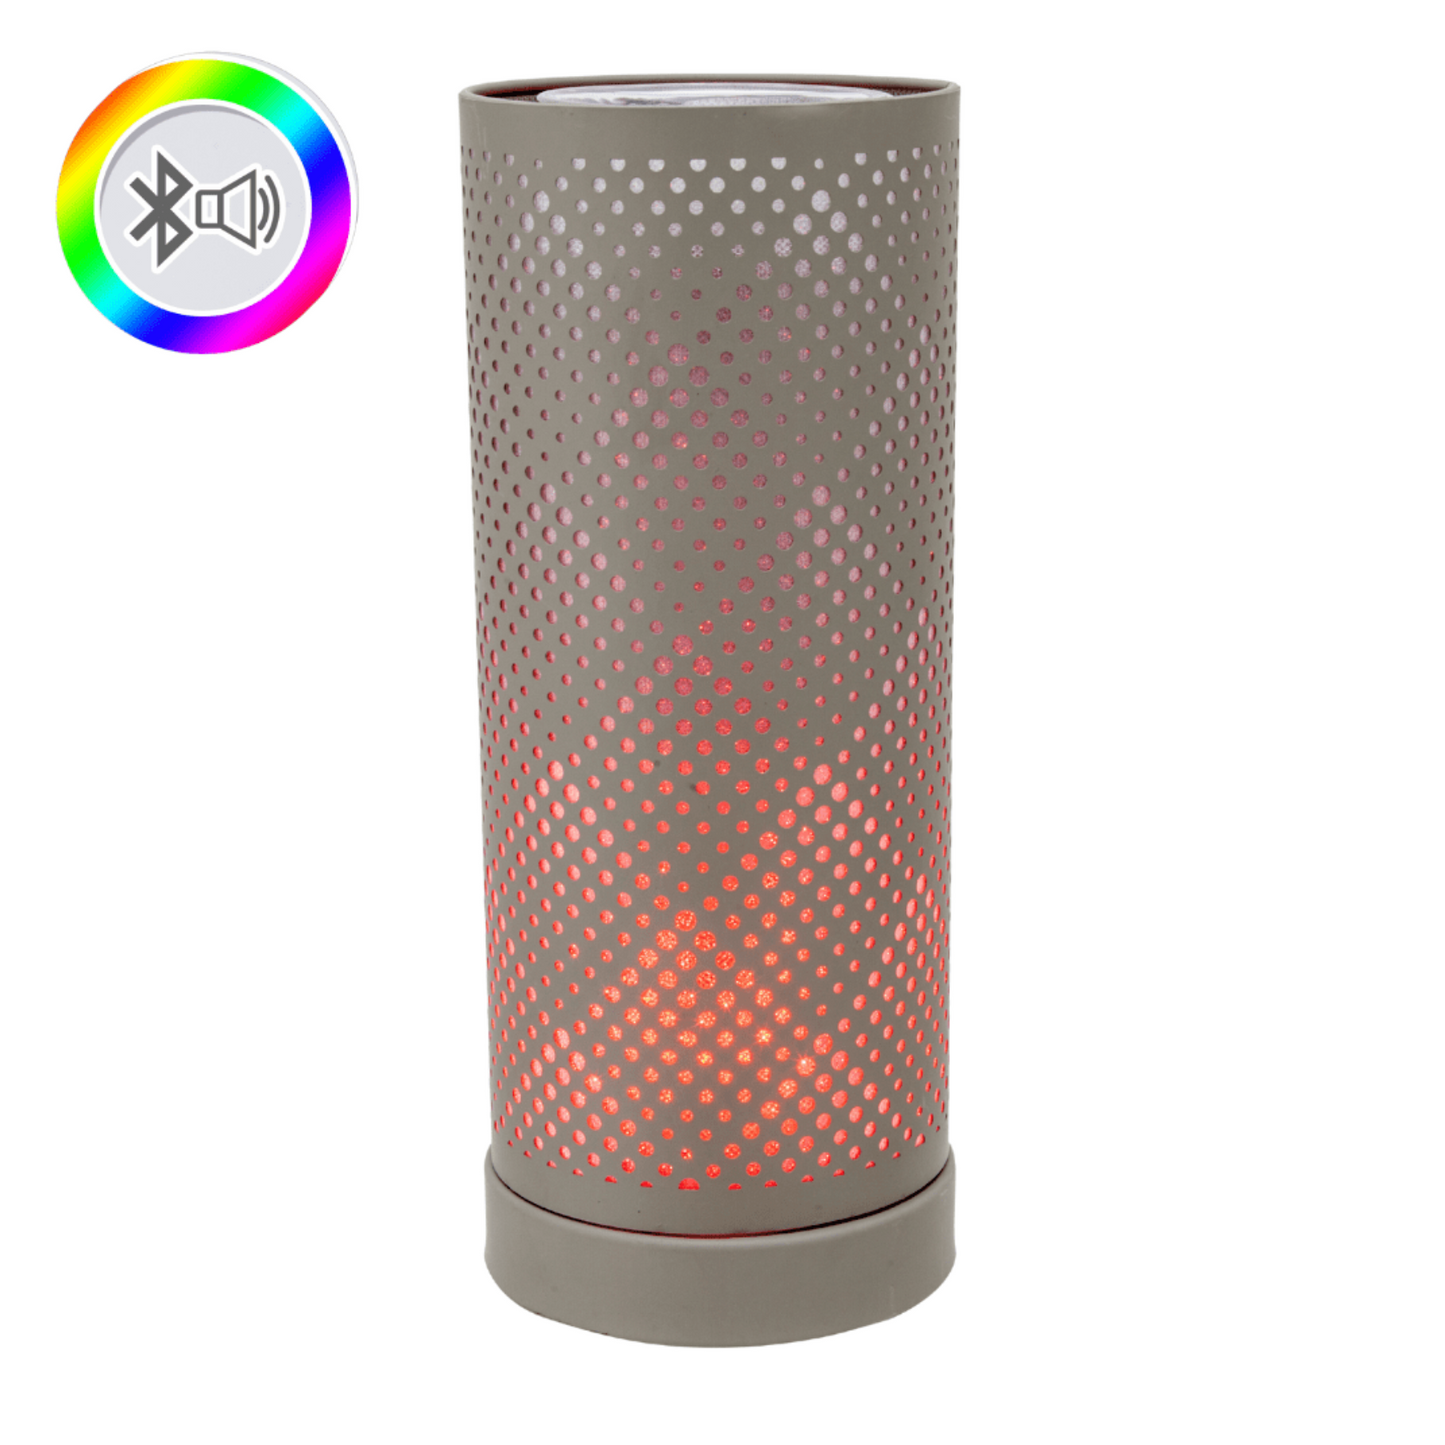 Bluetooth Speaker and Electric Wax Melt Burner - Grey